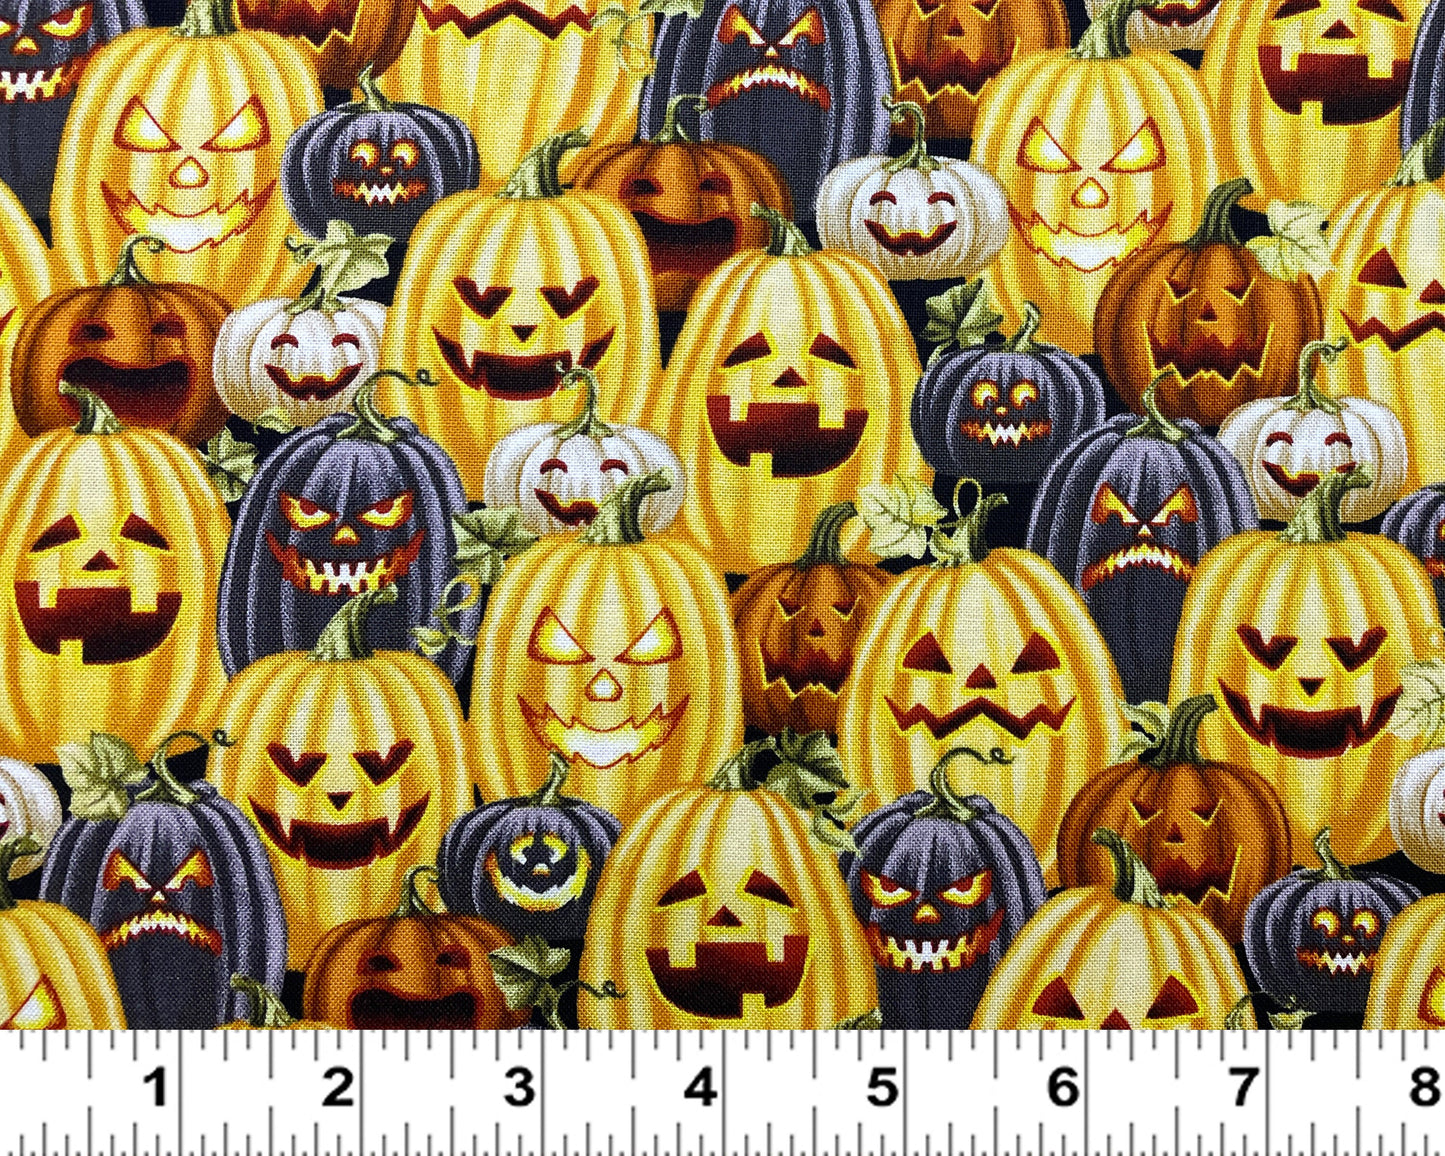 Pumpkin Patch Fabric - Jack O Lantern Patch - 100% Cotton Fabric by the yard - Fall Fabric Halloween theme Pumpkin material - Ships NEXT DAY